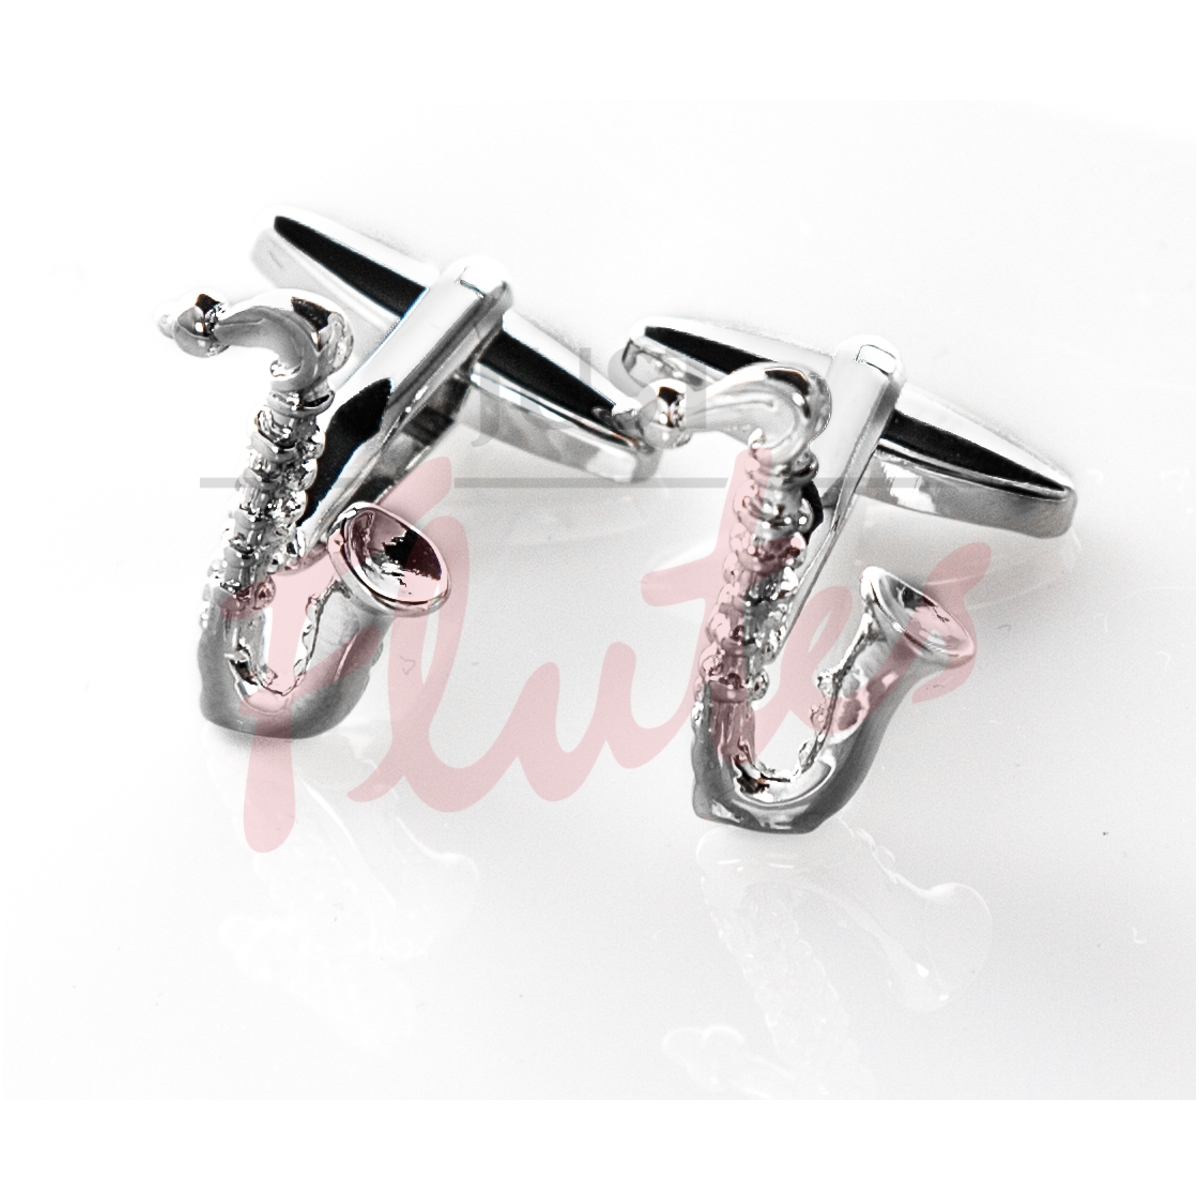 Silver-Plated Saxophone Cufflinks